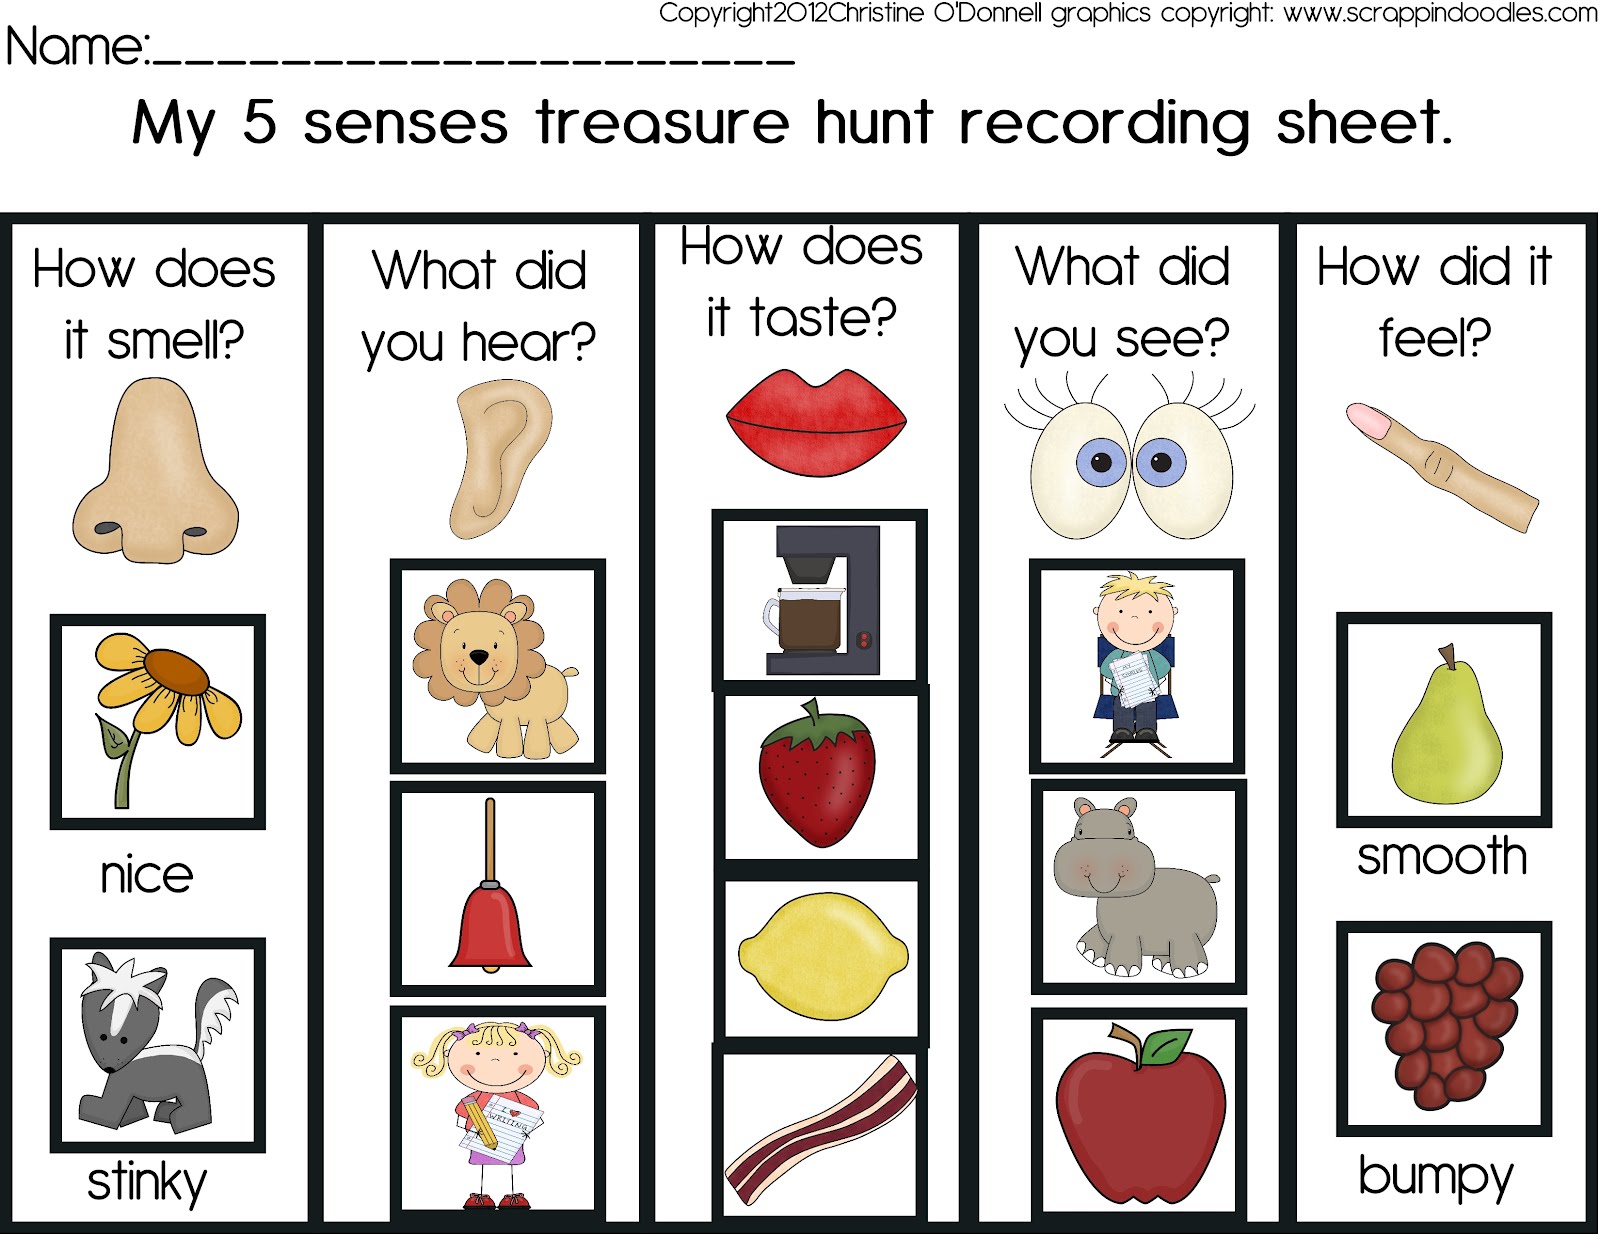 5 senses treasure hunt and a freebie!